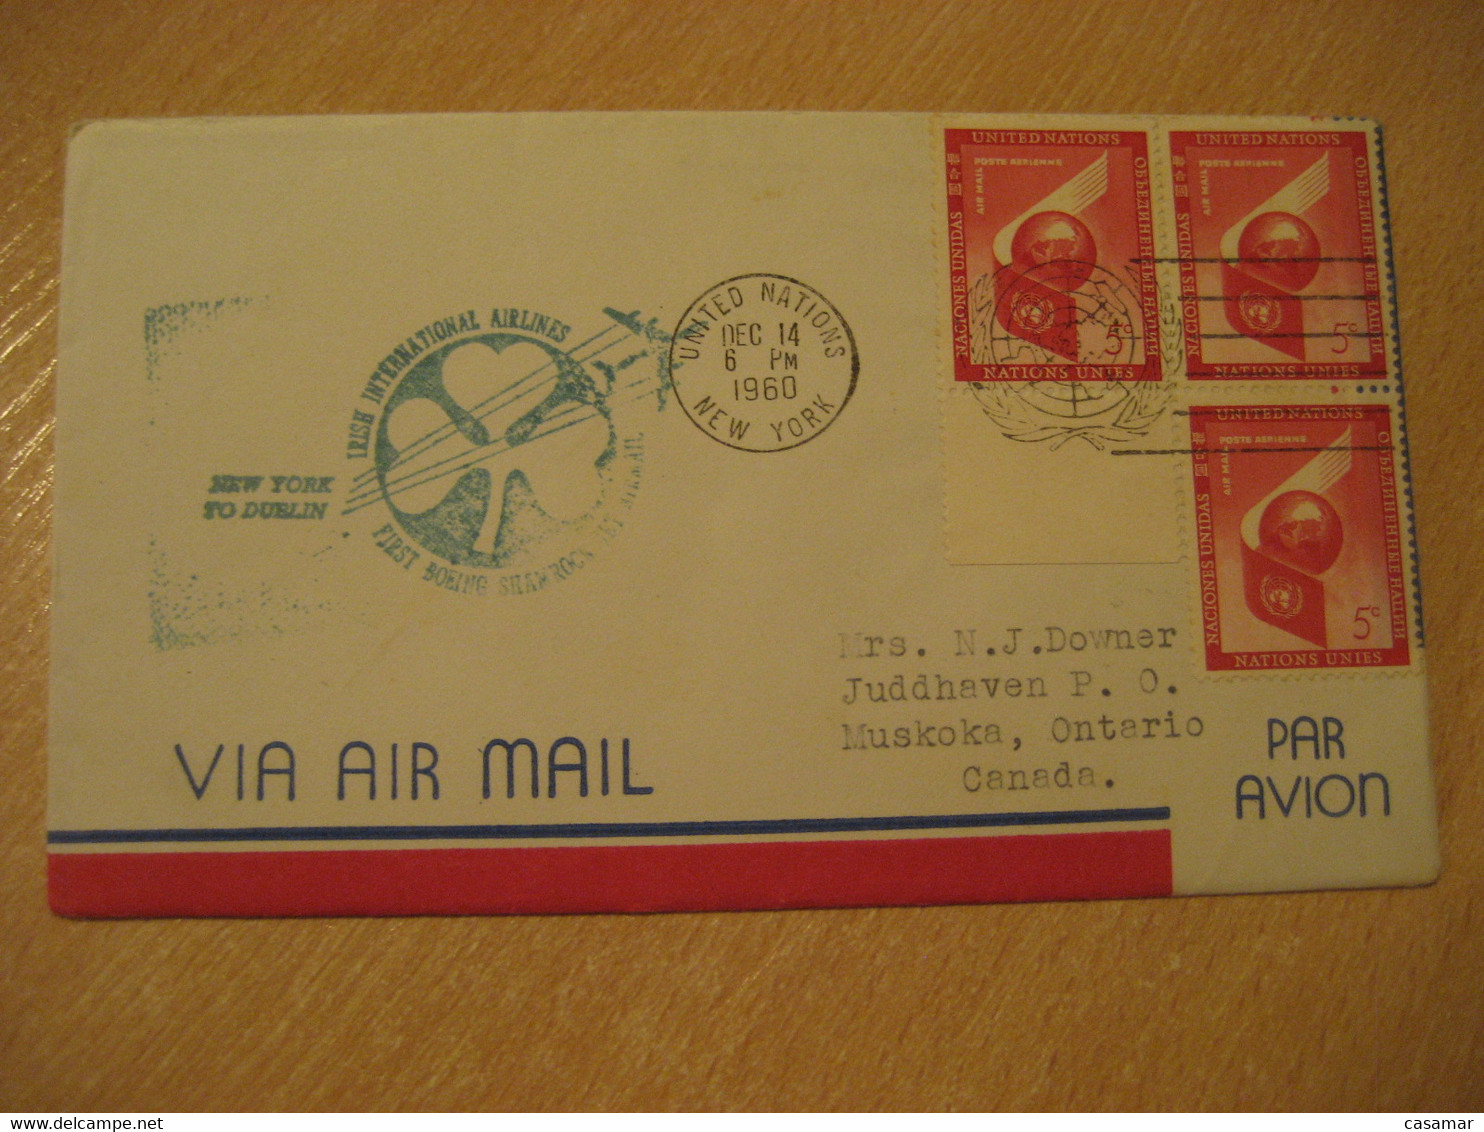 DUBLIN New York Muskoka 1960 IRISH Airlines Airline Boeing First Flight Cancel Cover IRELAND USA UNITED NATIONS CANADA - Airmail